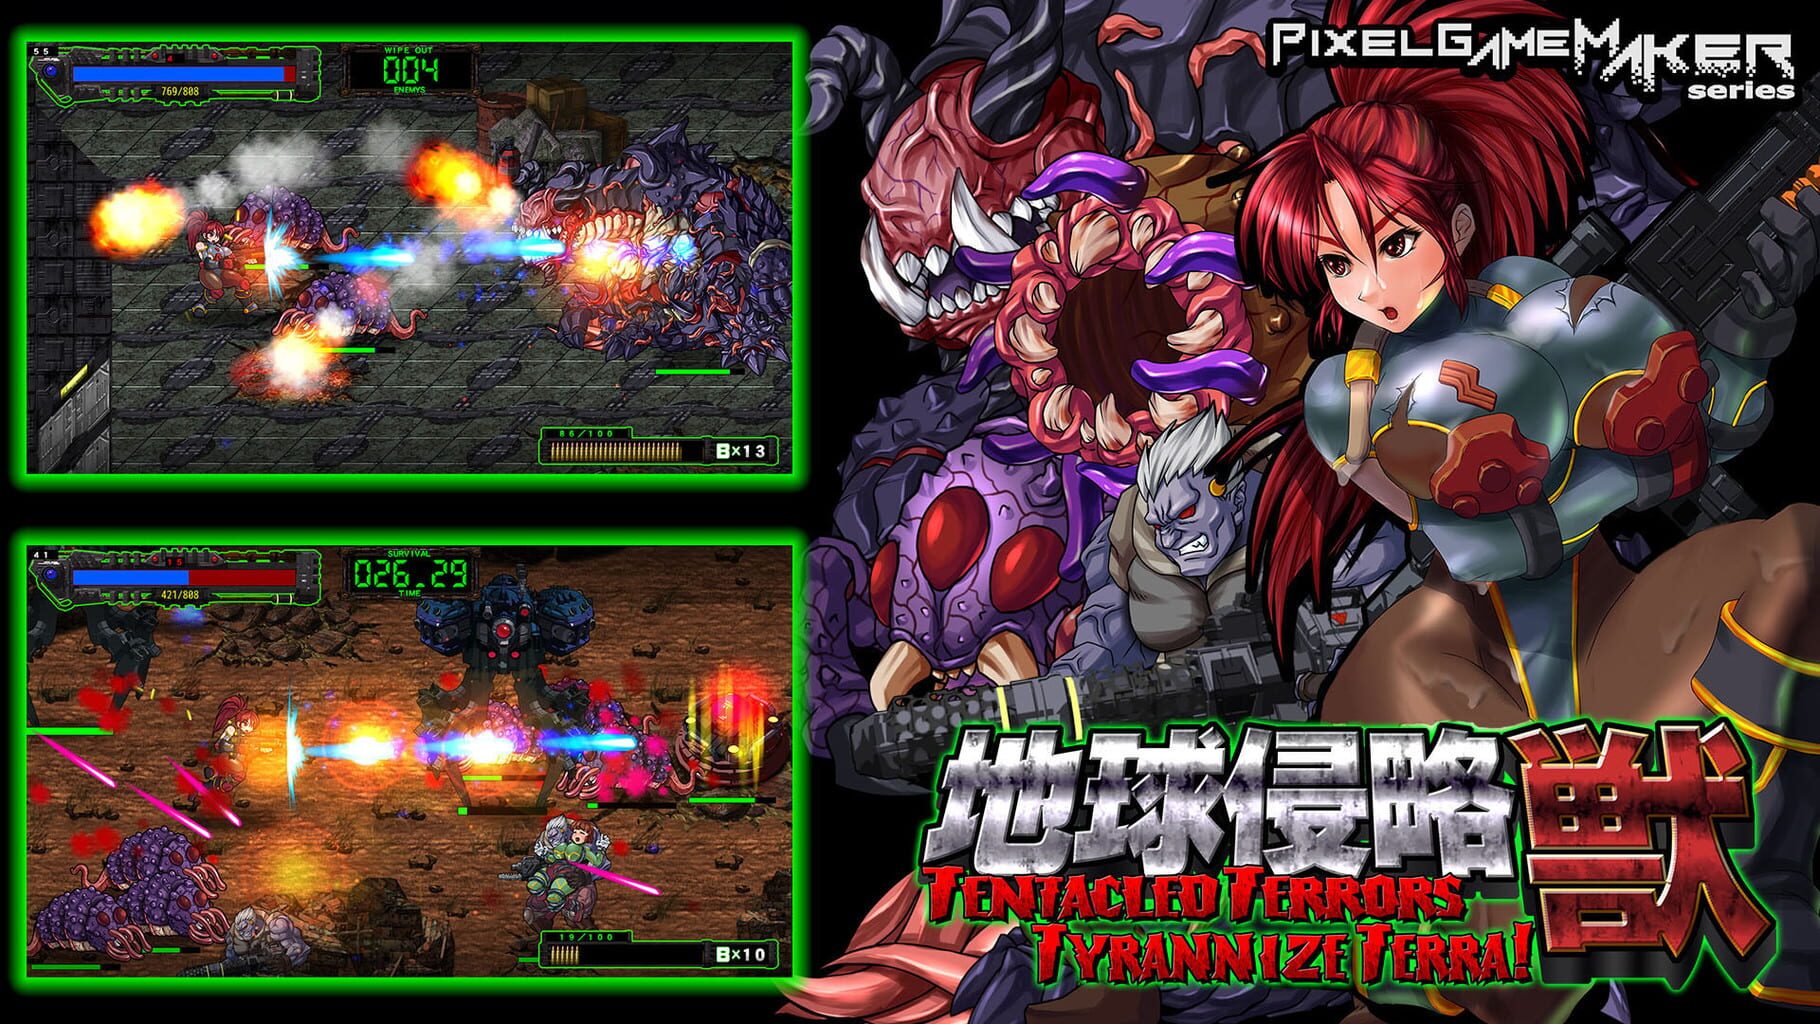 Arte - Pixel Game Maker Series: Tentacled Terrors Tyrannize Terra!